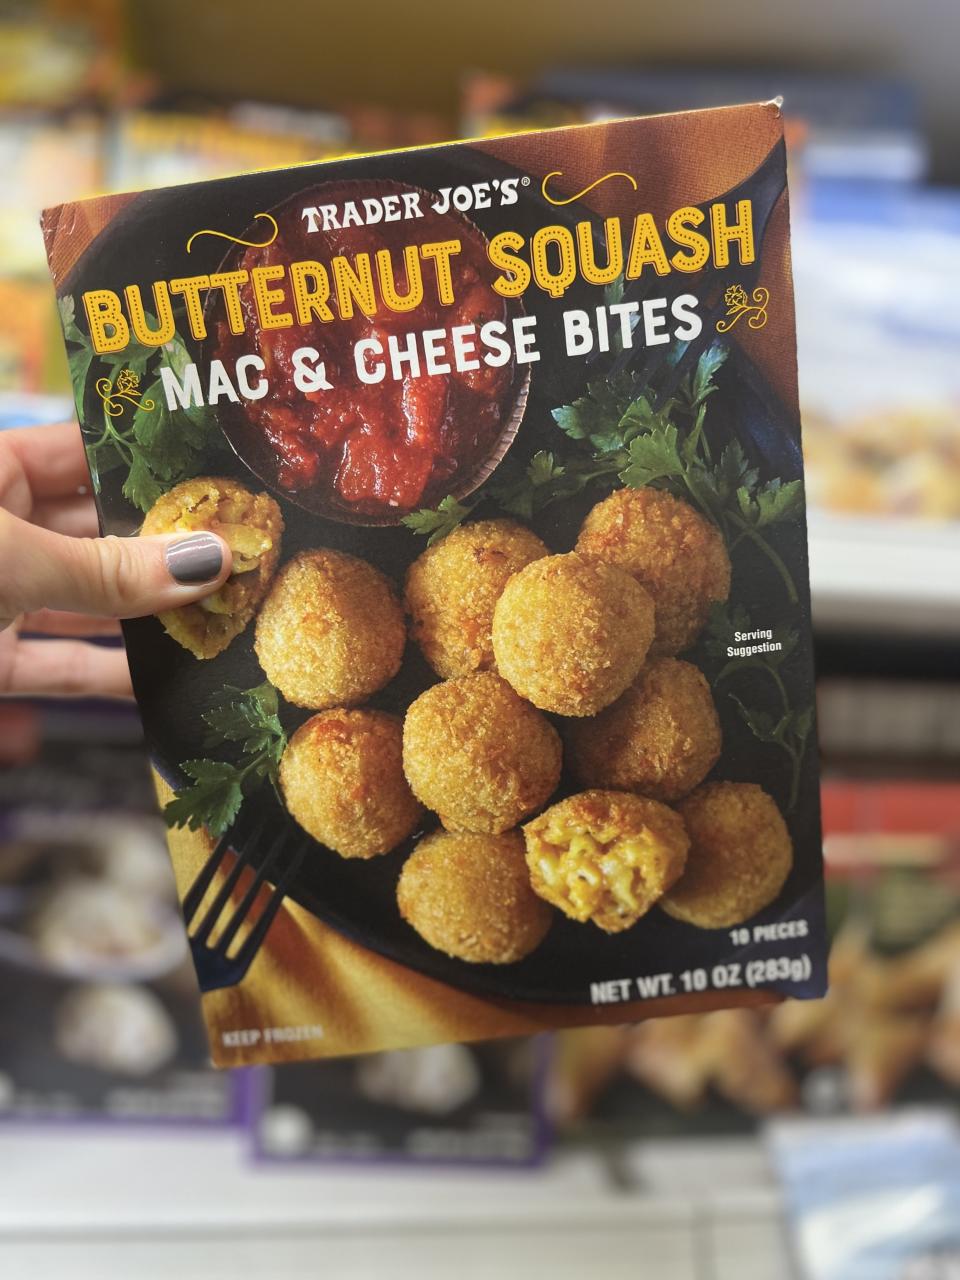 A box of Butternut Squash Mac & Cheese Bites